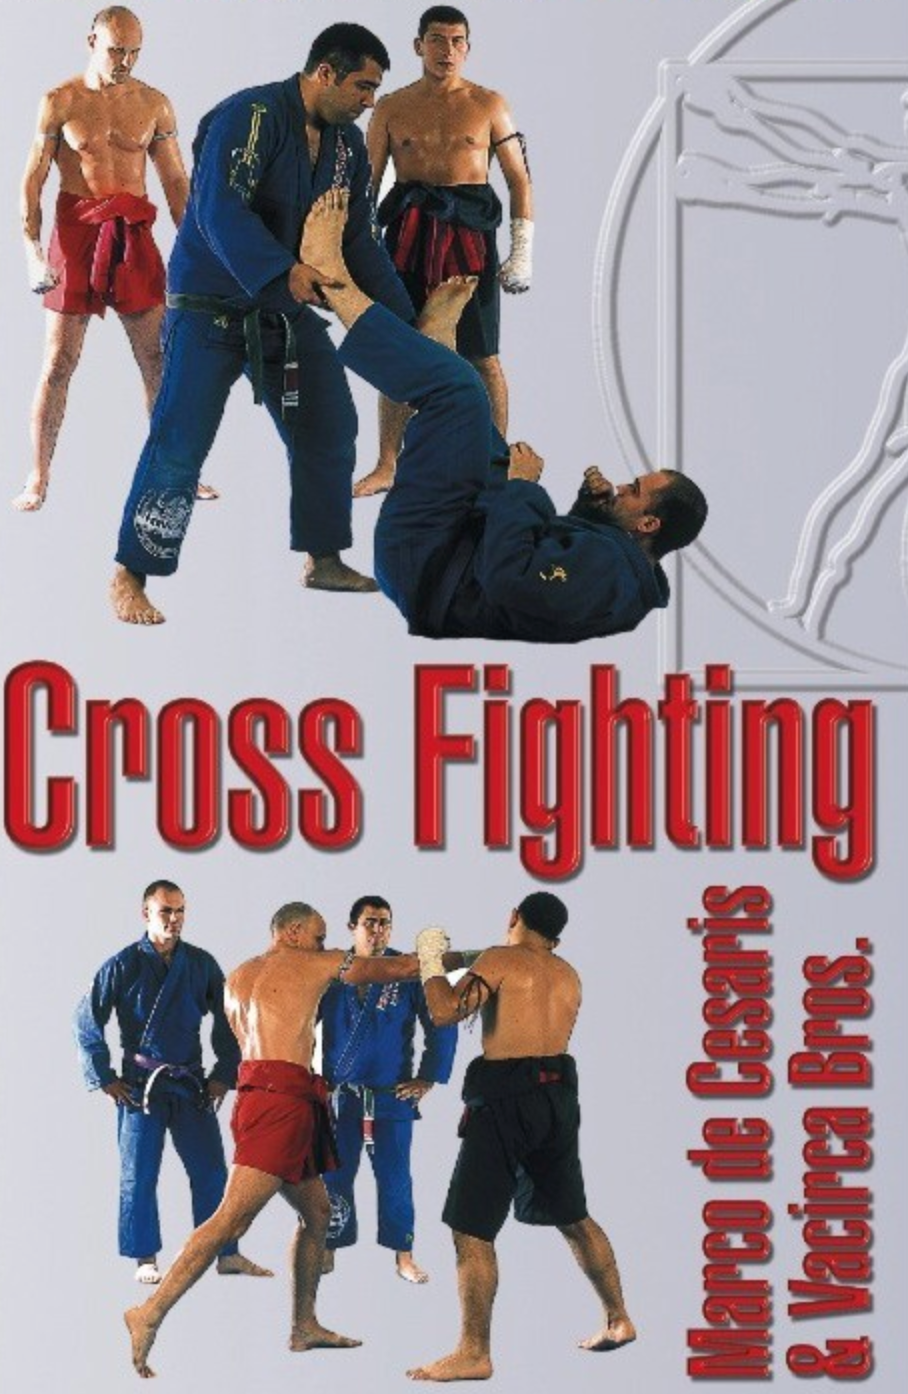 BJJ and Muay Thai Cross Fighting DVD with Marco de Cesaris & Vacirca Bros - Budovideos Inc